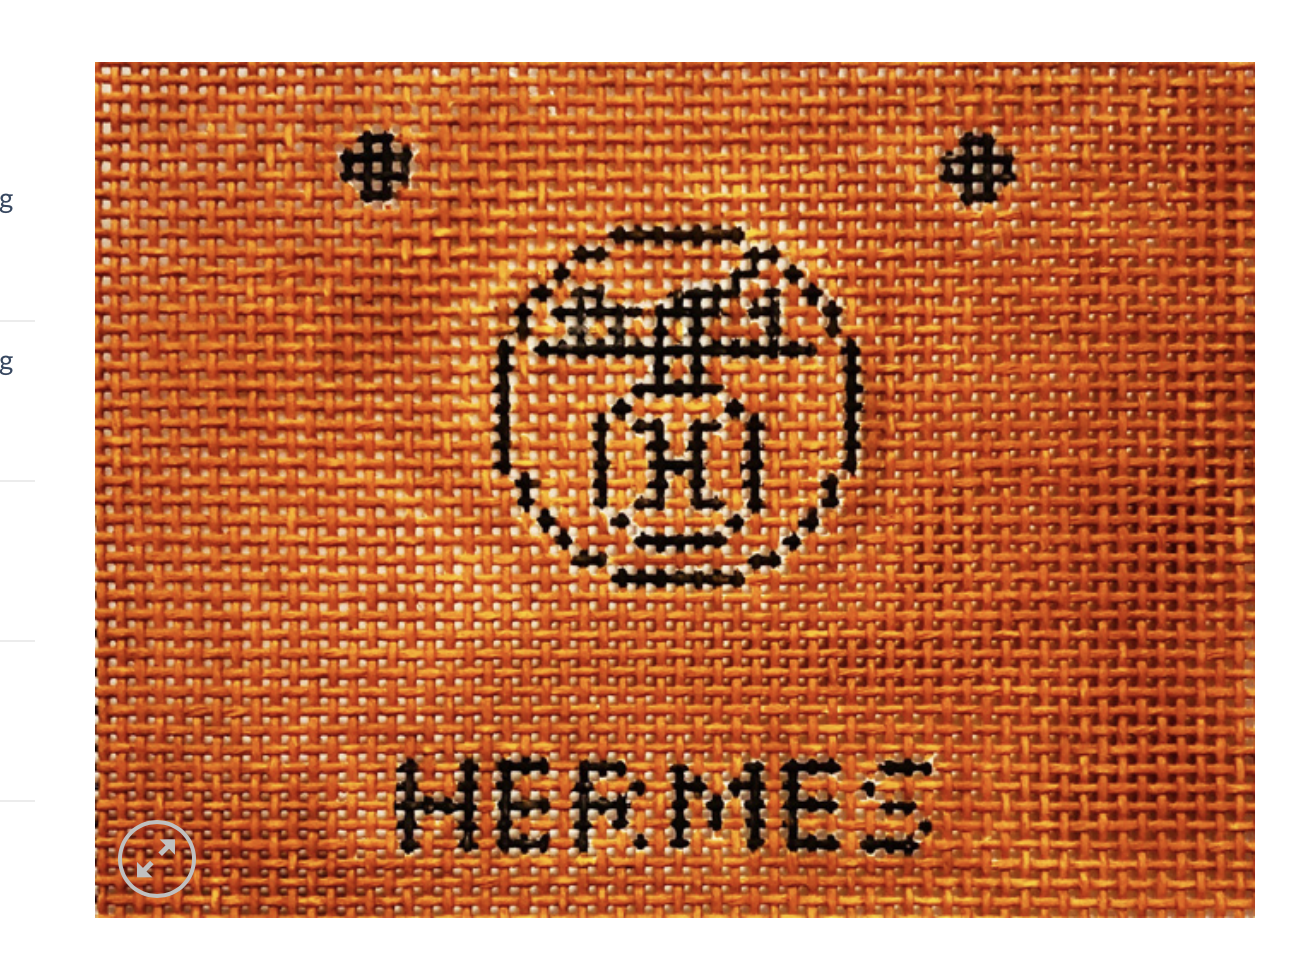 Canvas HERMES  SHOPPING BAG  X338